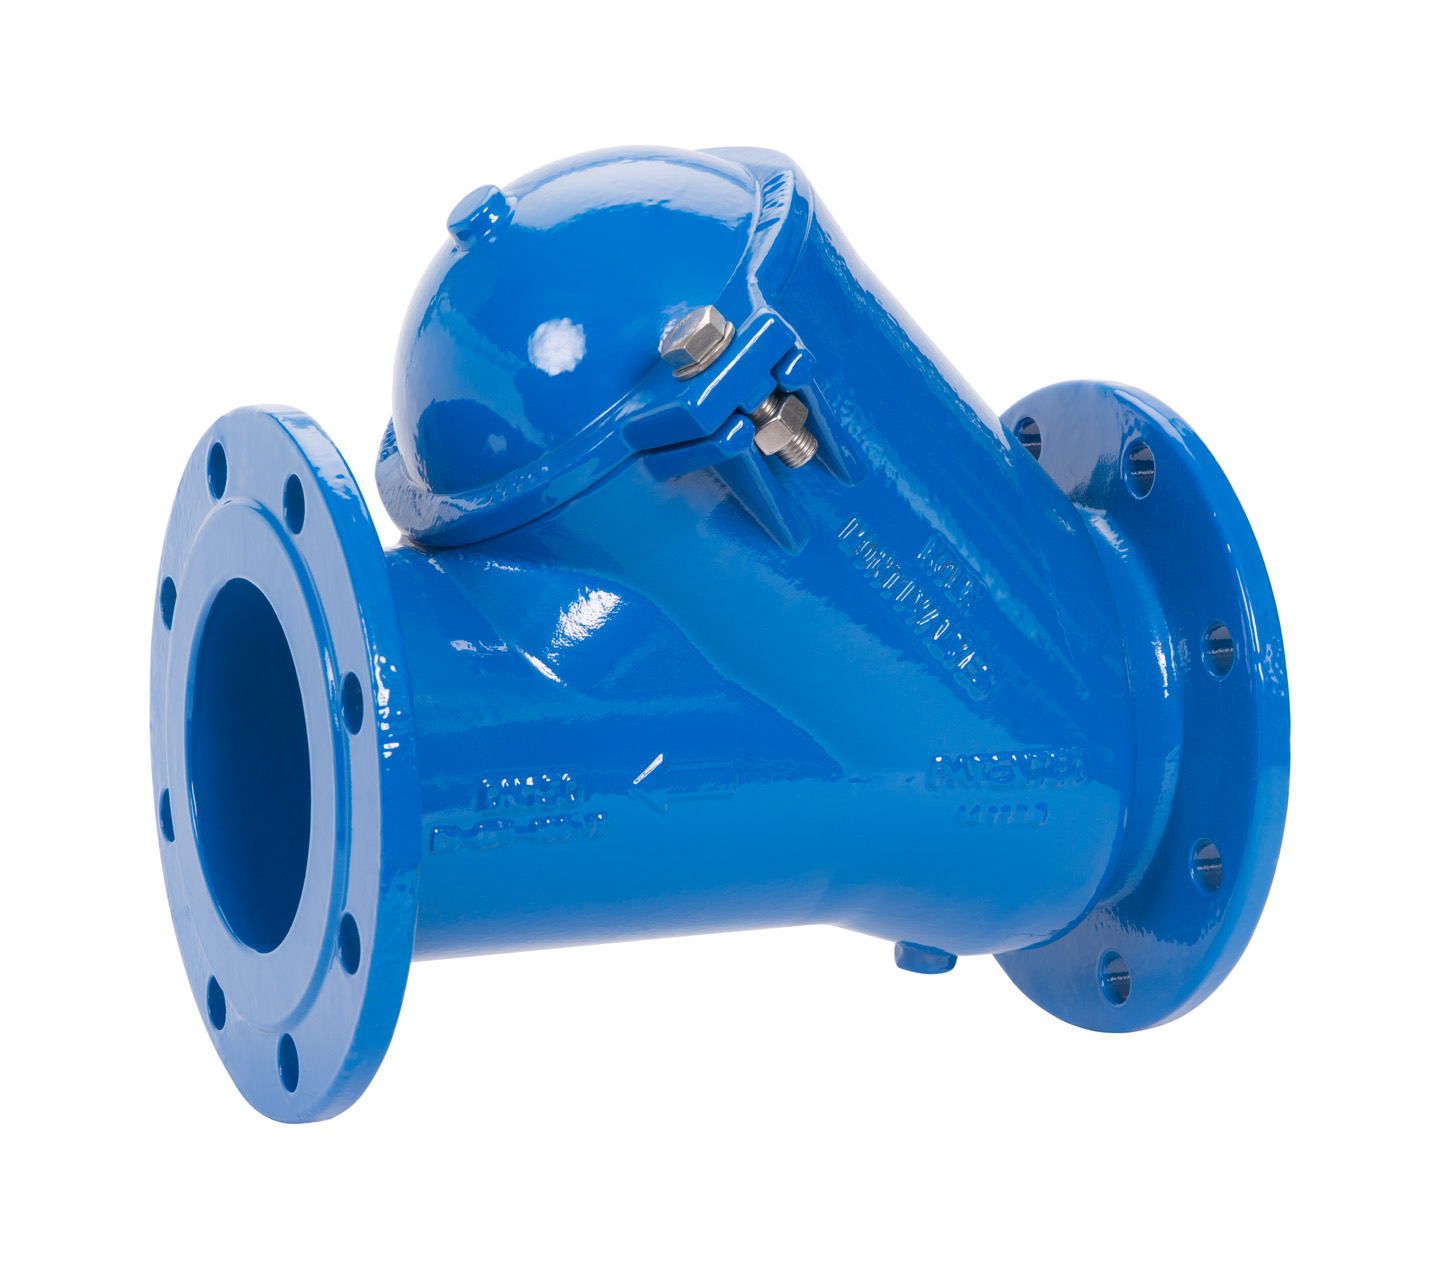 Ball check valve, type 4900 - Technimex International BV